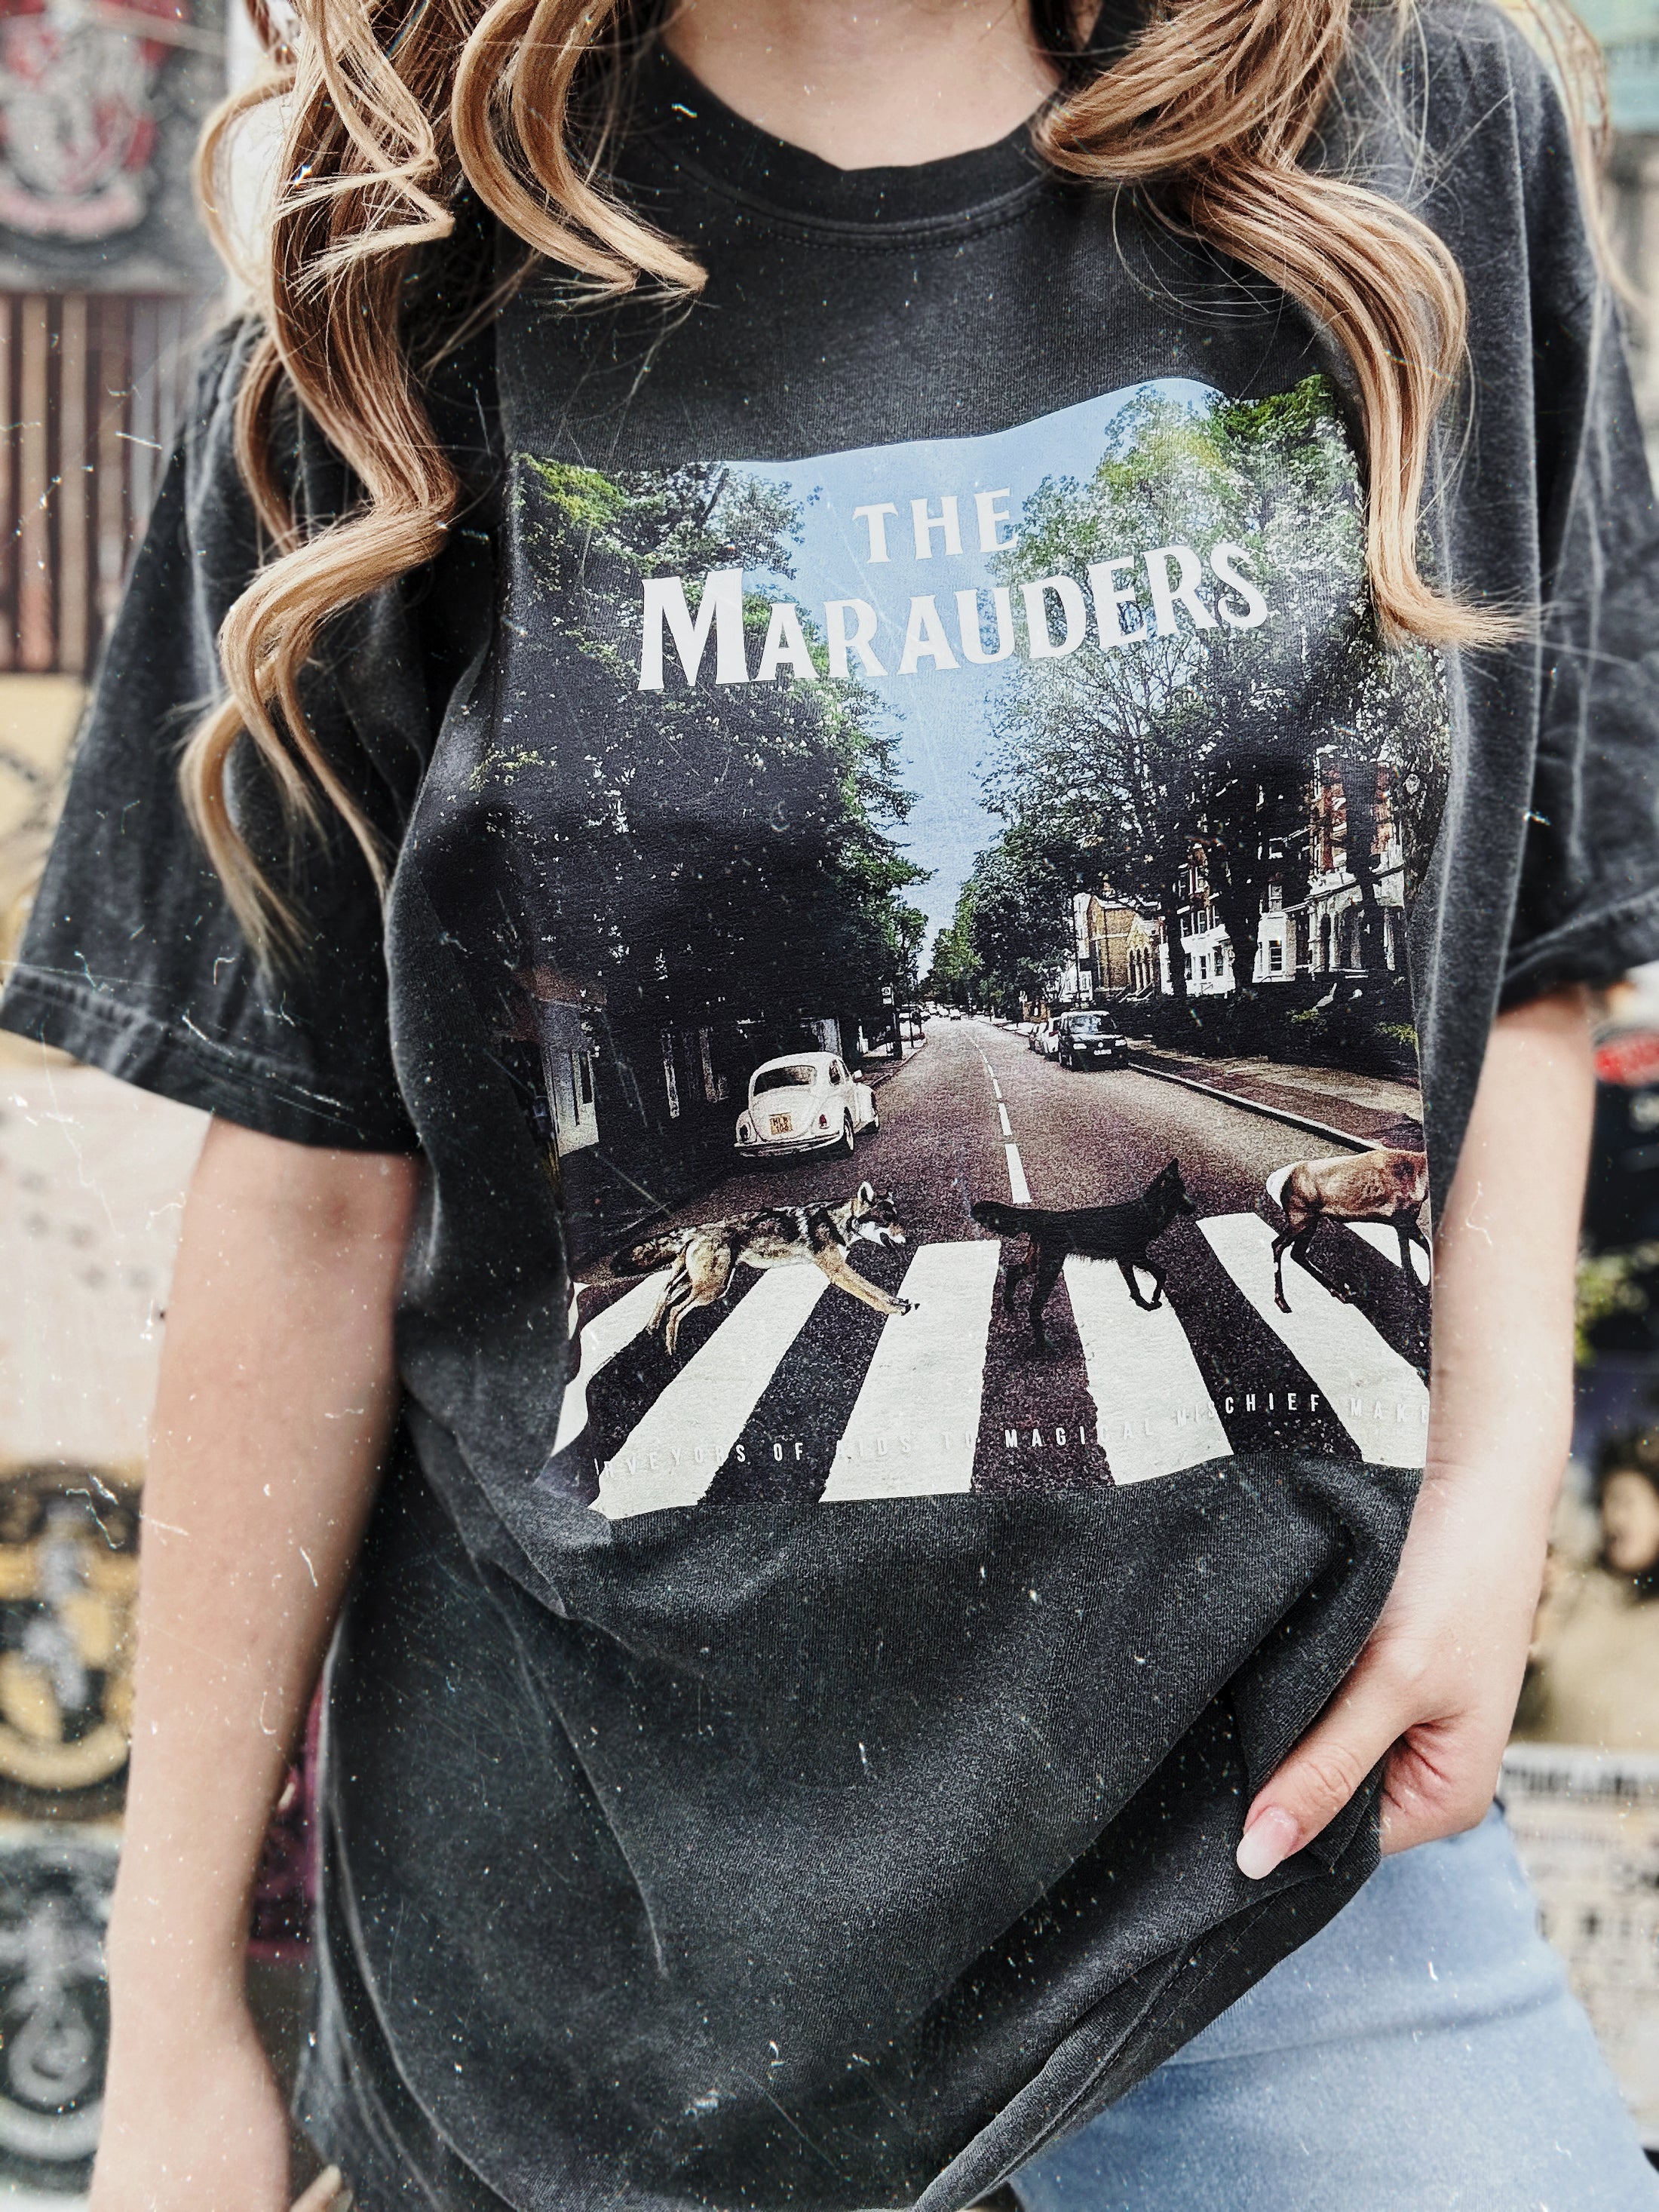 Marauders Abbey Road Garment Dyed Tee